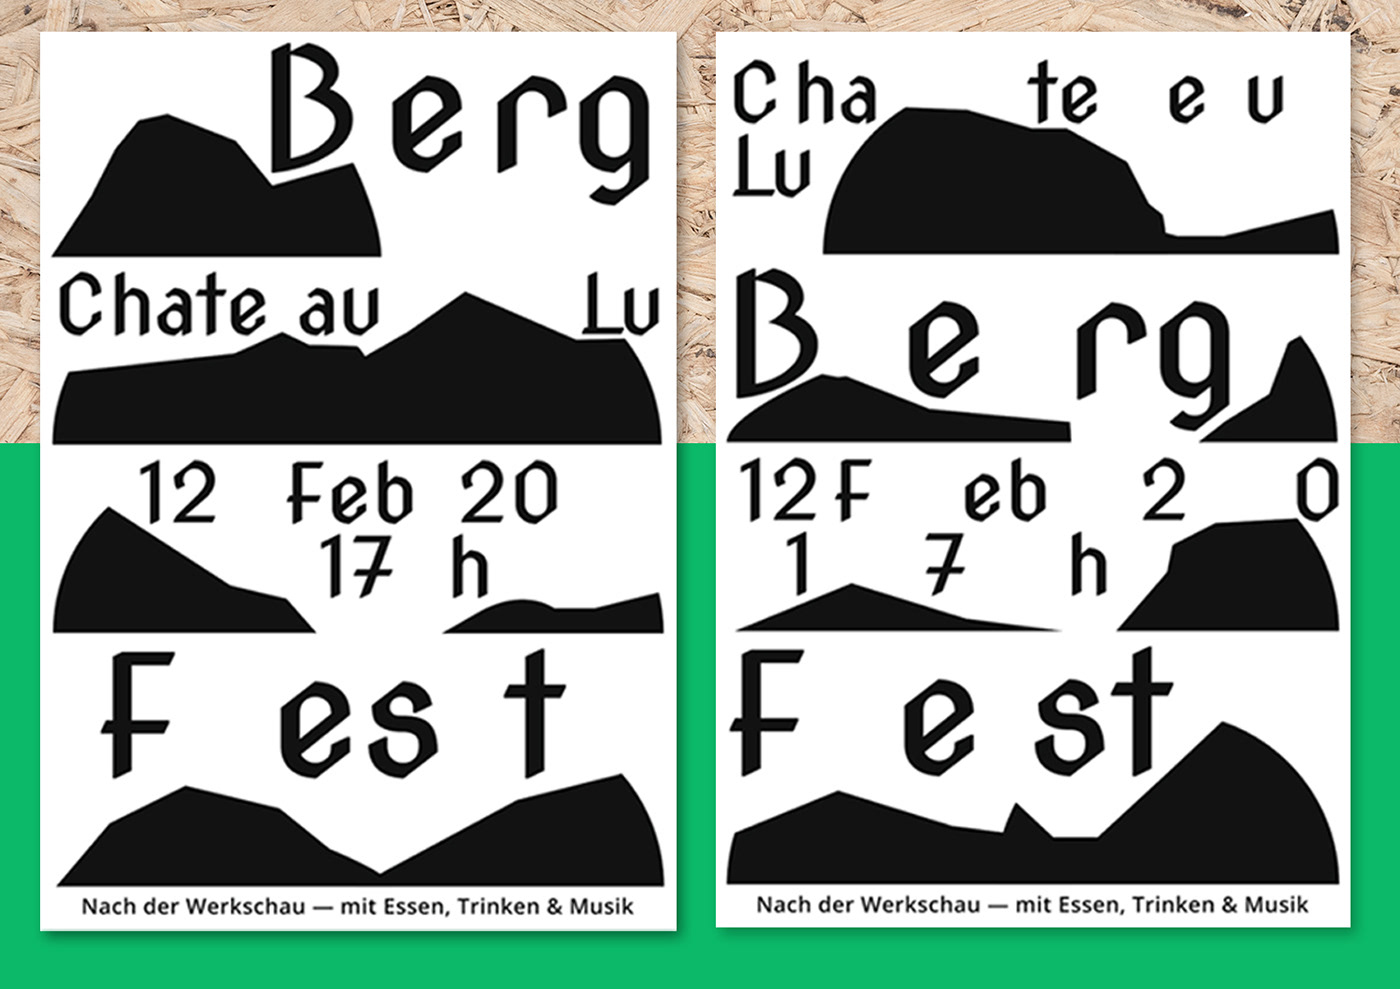 bergfest music Musik party poster Werkschau